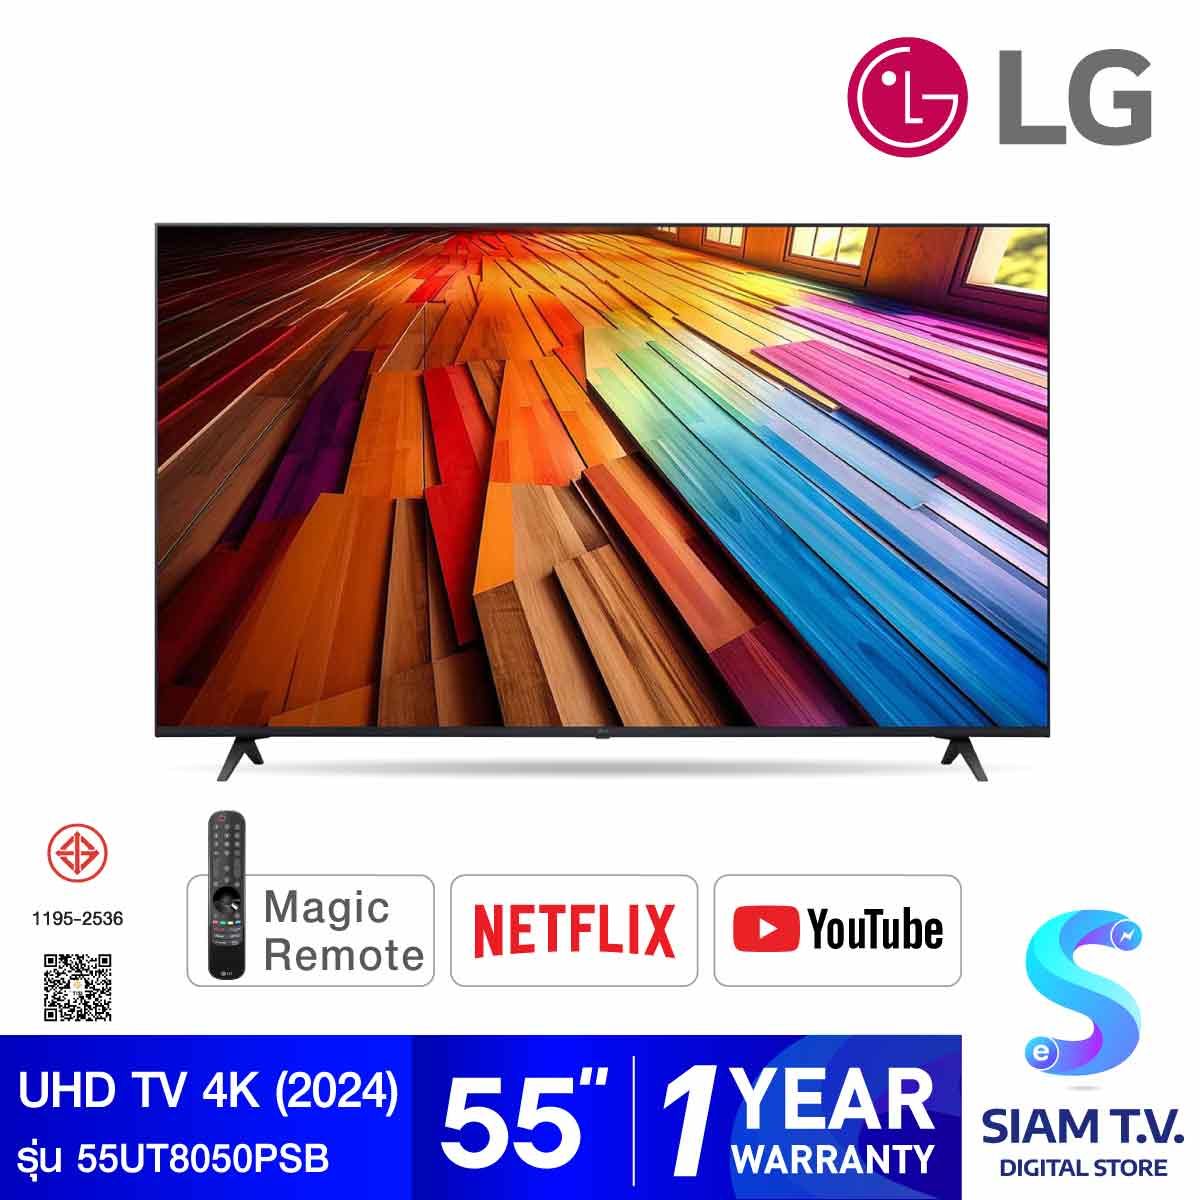 LG UHD Smart TV 4K 2024 รุ่น 55UT8050PSB สมาร์ททีวีขนาด 55 นิ้ว